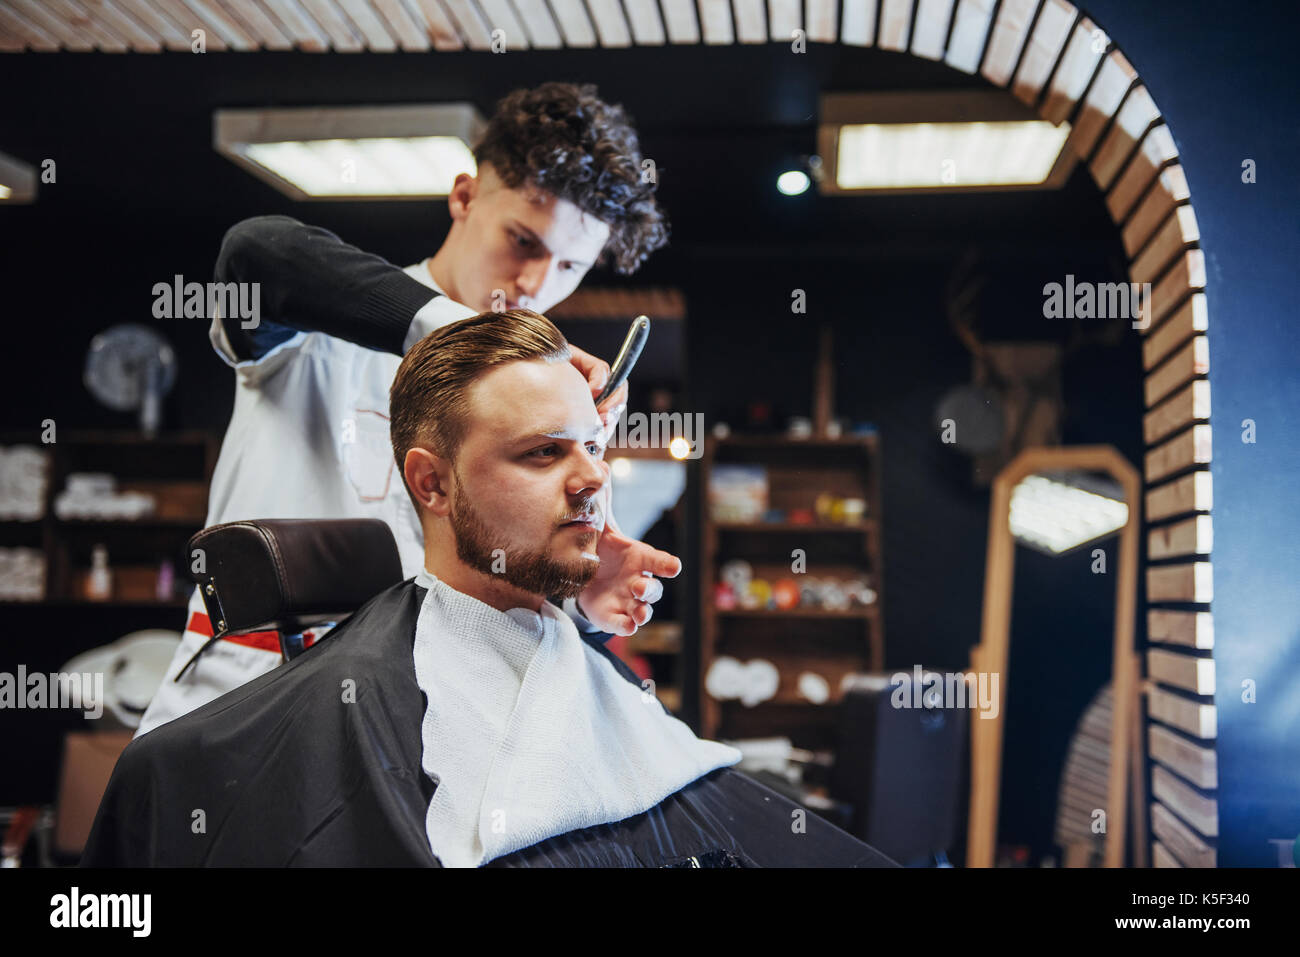 Man Hairdresser Doing Haircut Beard Adult Men In The Mens Hair